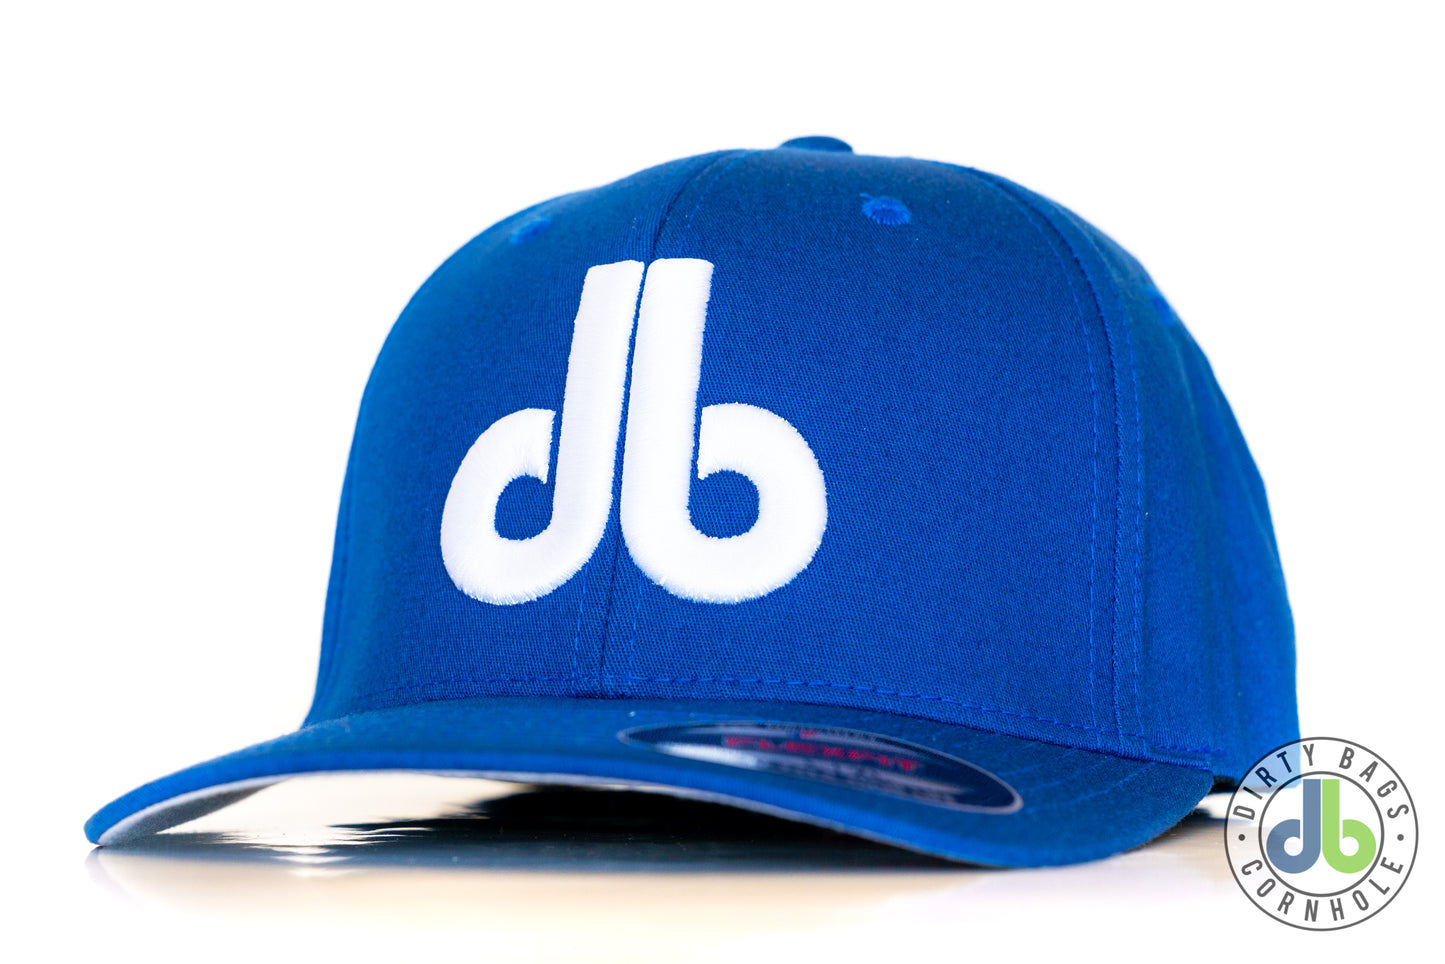 db Hat – Blue with White db Flexfit